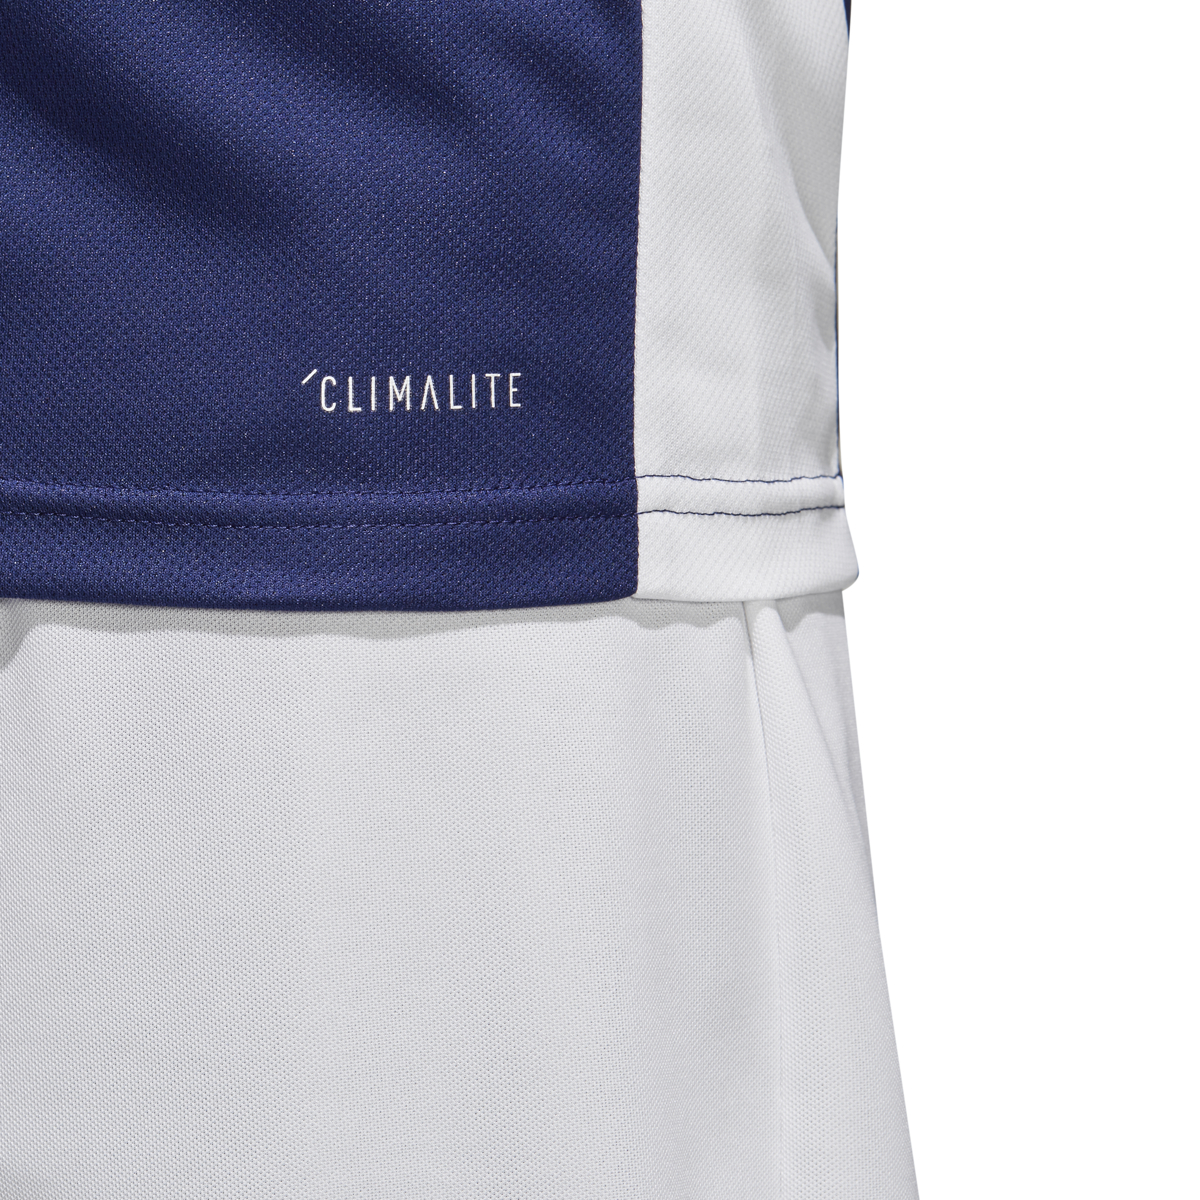 Adidas DARK BLUE/WHITE Men's Entrada ClimaLite Soccer Shirt, US Small - image 5 of 6